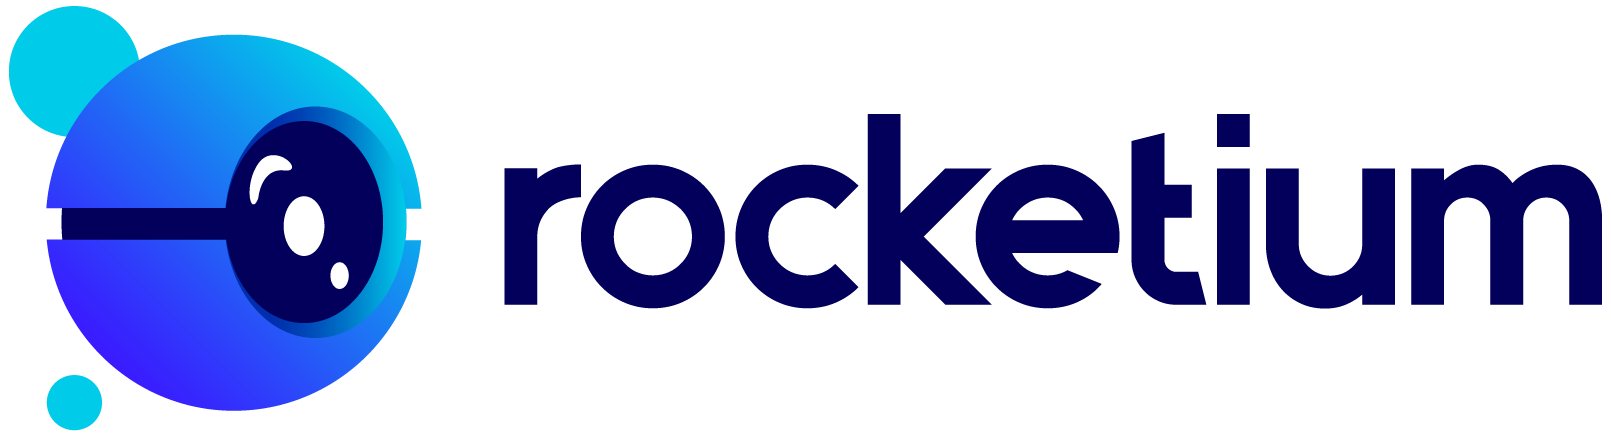 Rocketium.com Technologies Private Limited